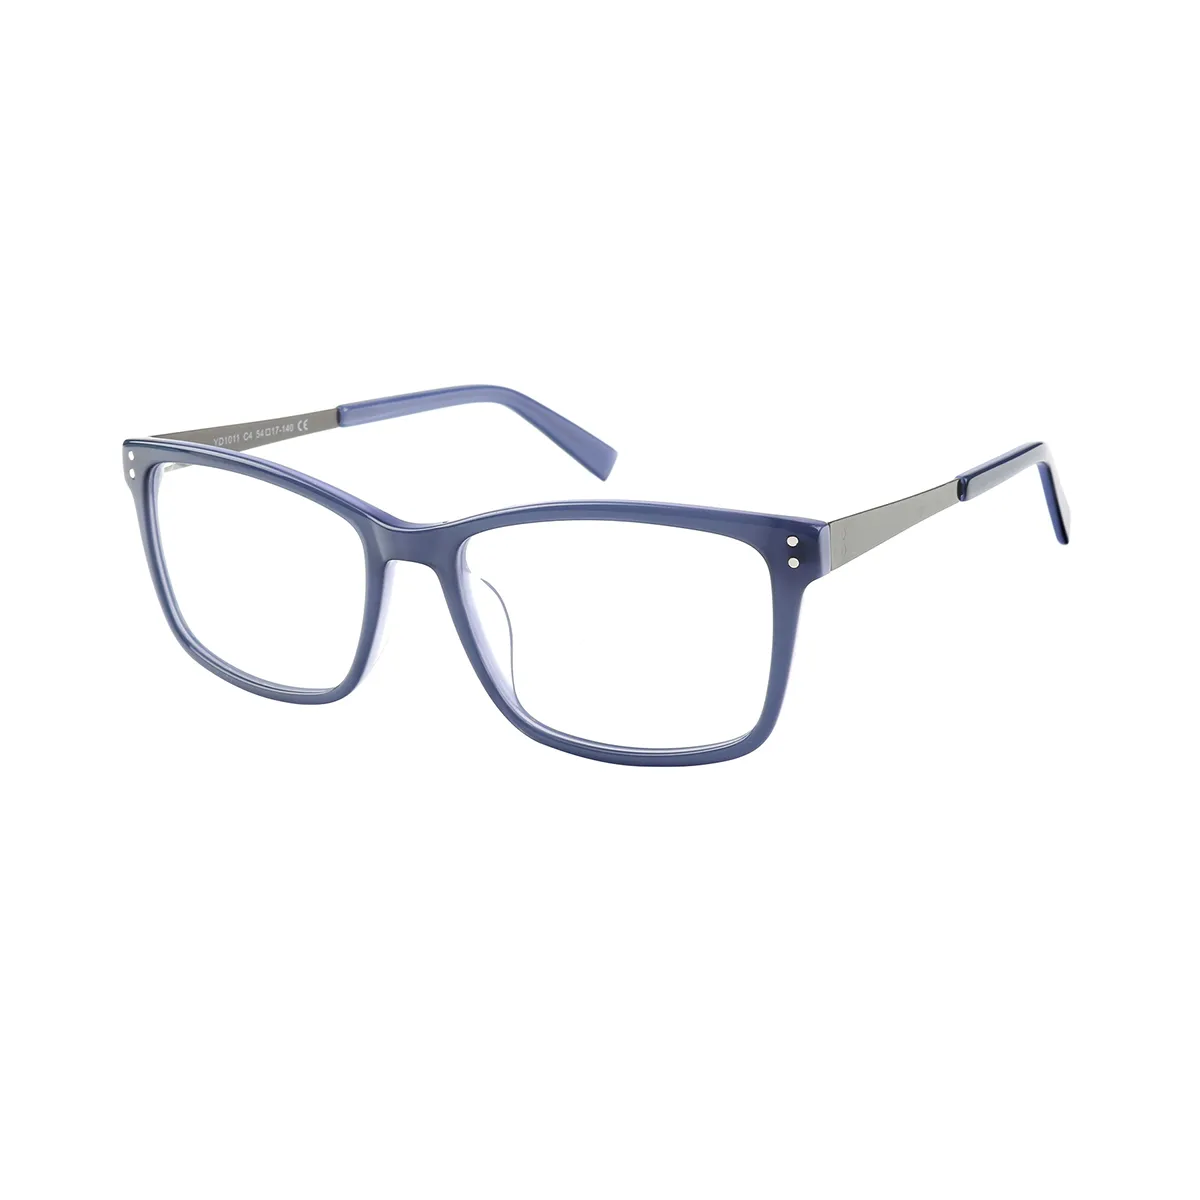 Armison - Square Blue Glasses for Men - EFE